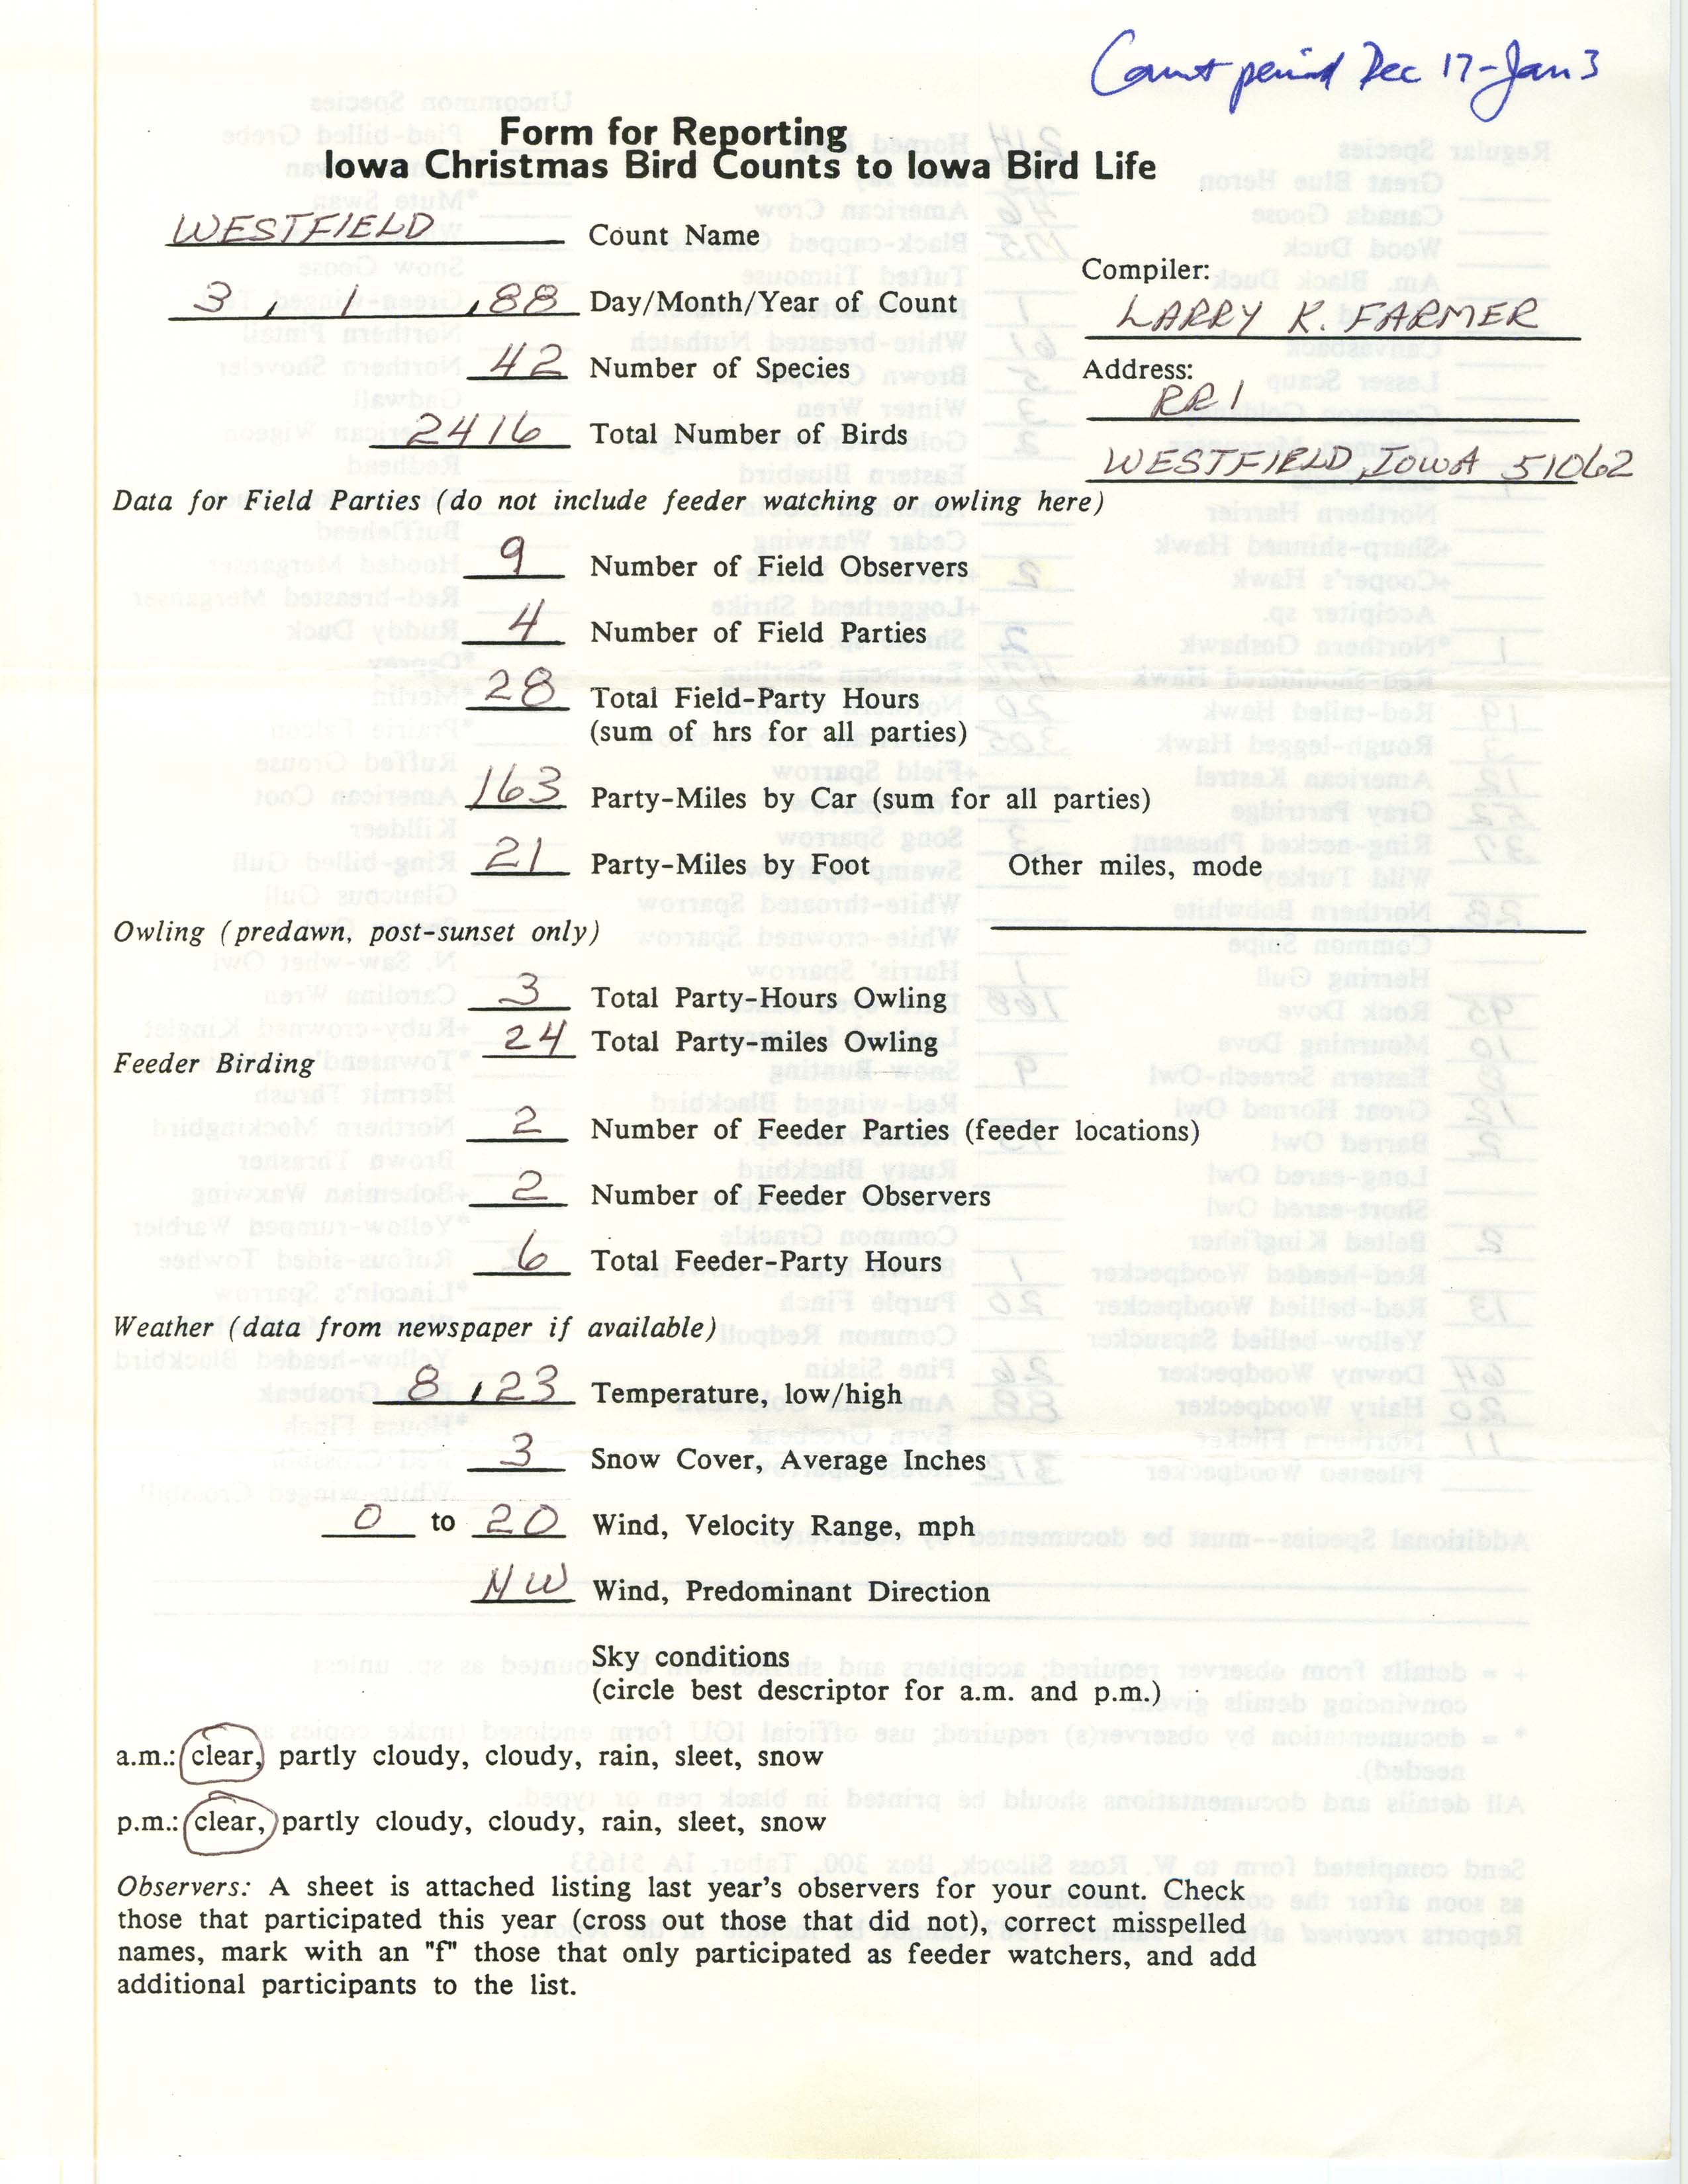 Form for reporting Iowa Christmas bird counts to Iowa Bird Life, Larry Farmer, March 1988